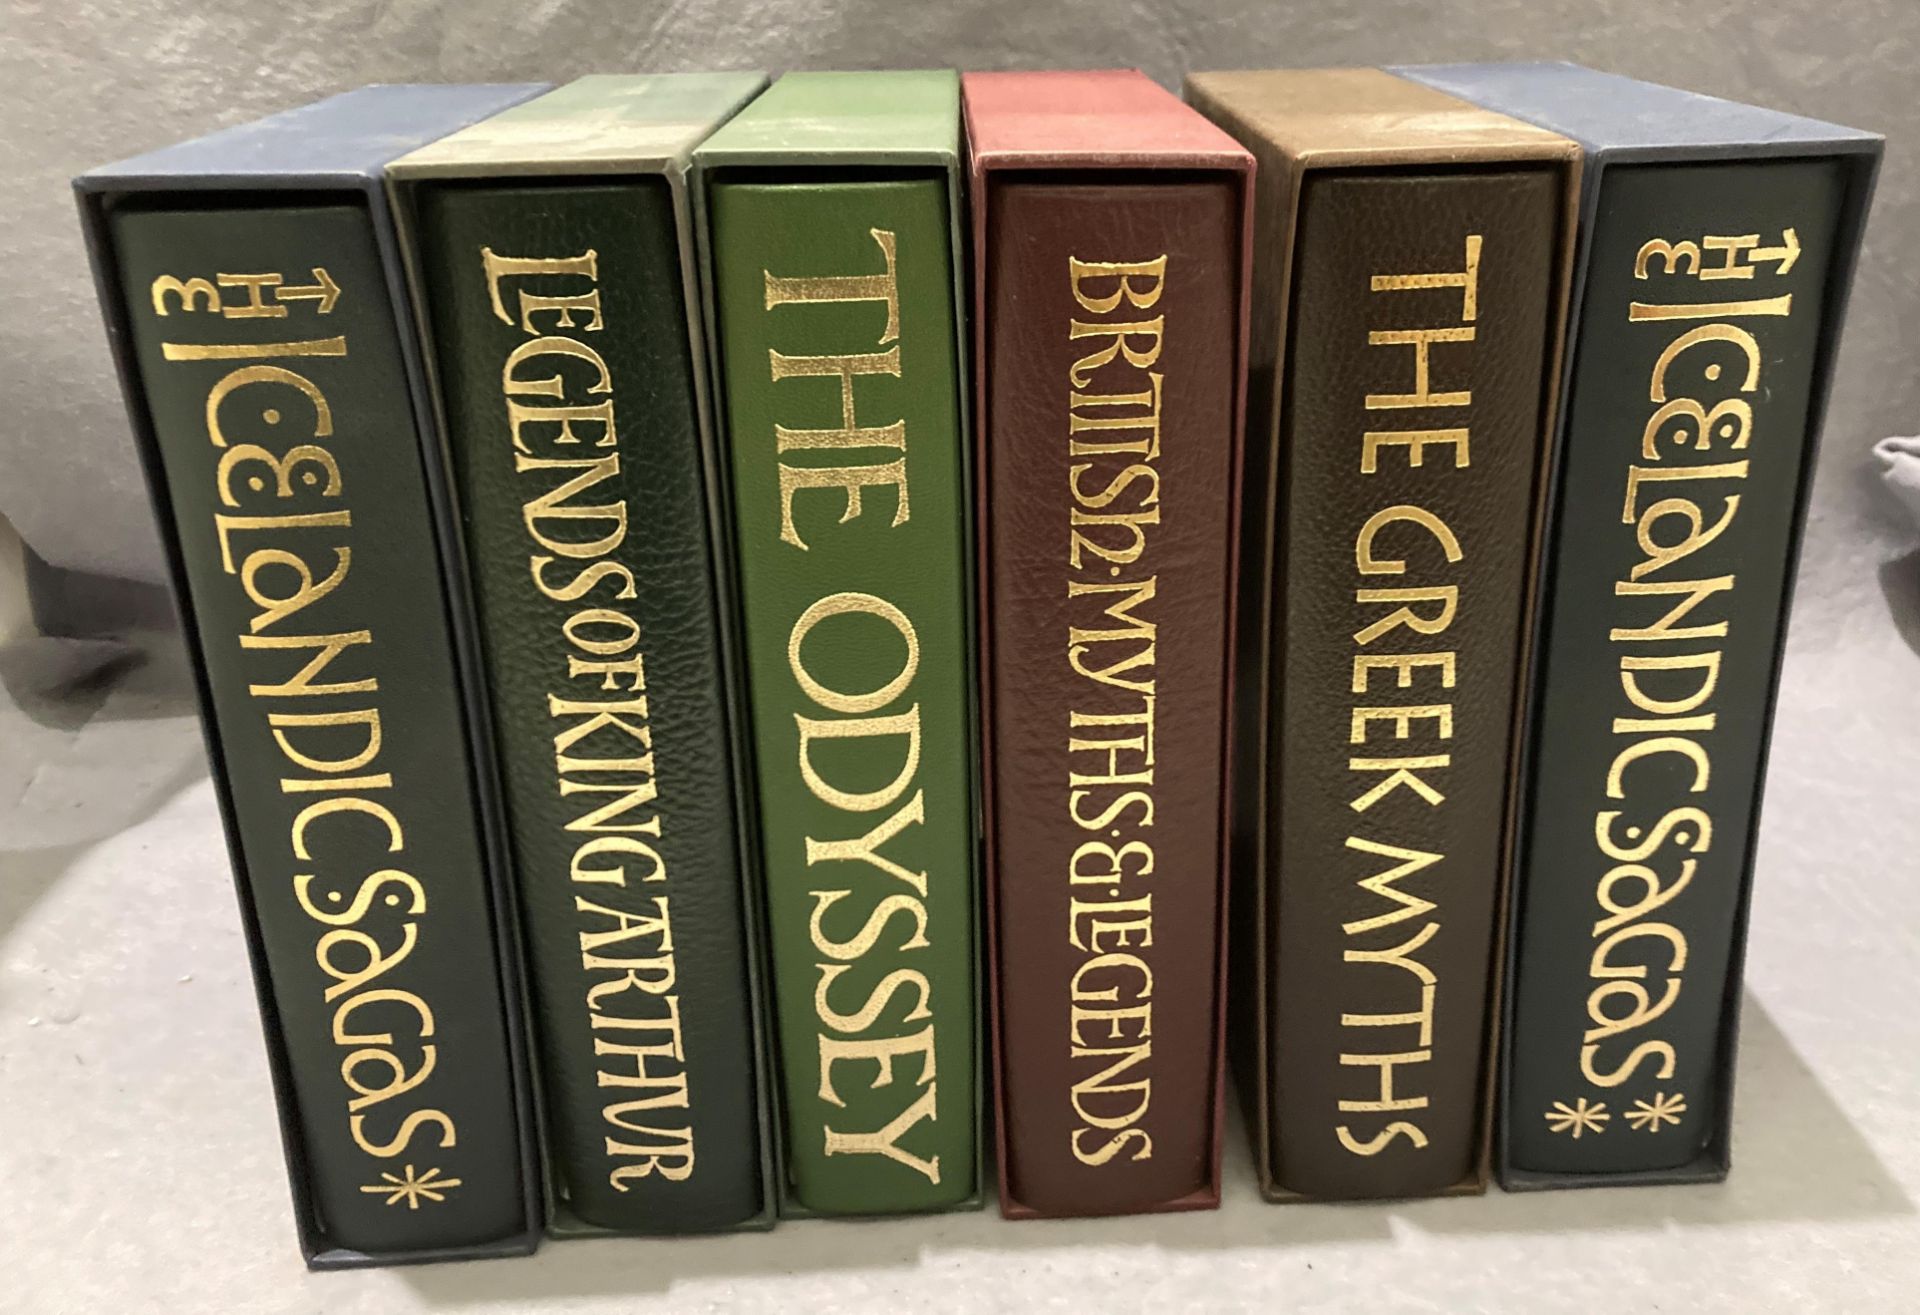 Folio Society - Six cased books - 'The Greek Myths', 'British Myths and Legends',